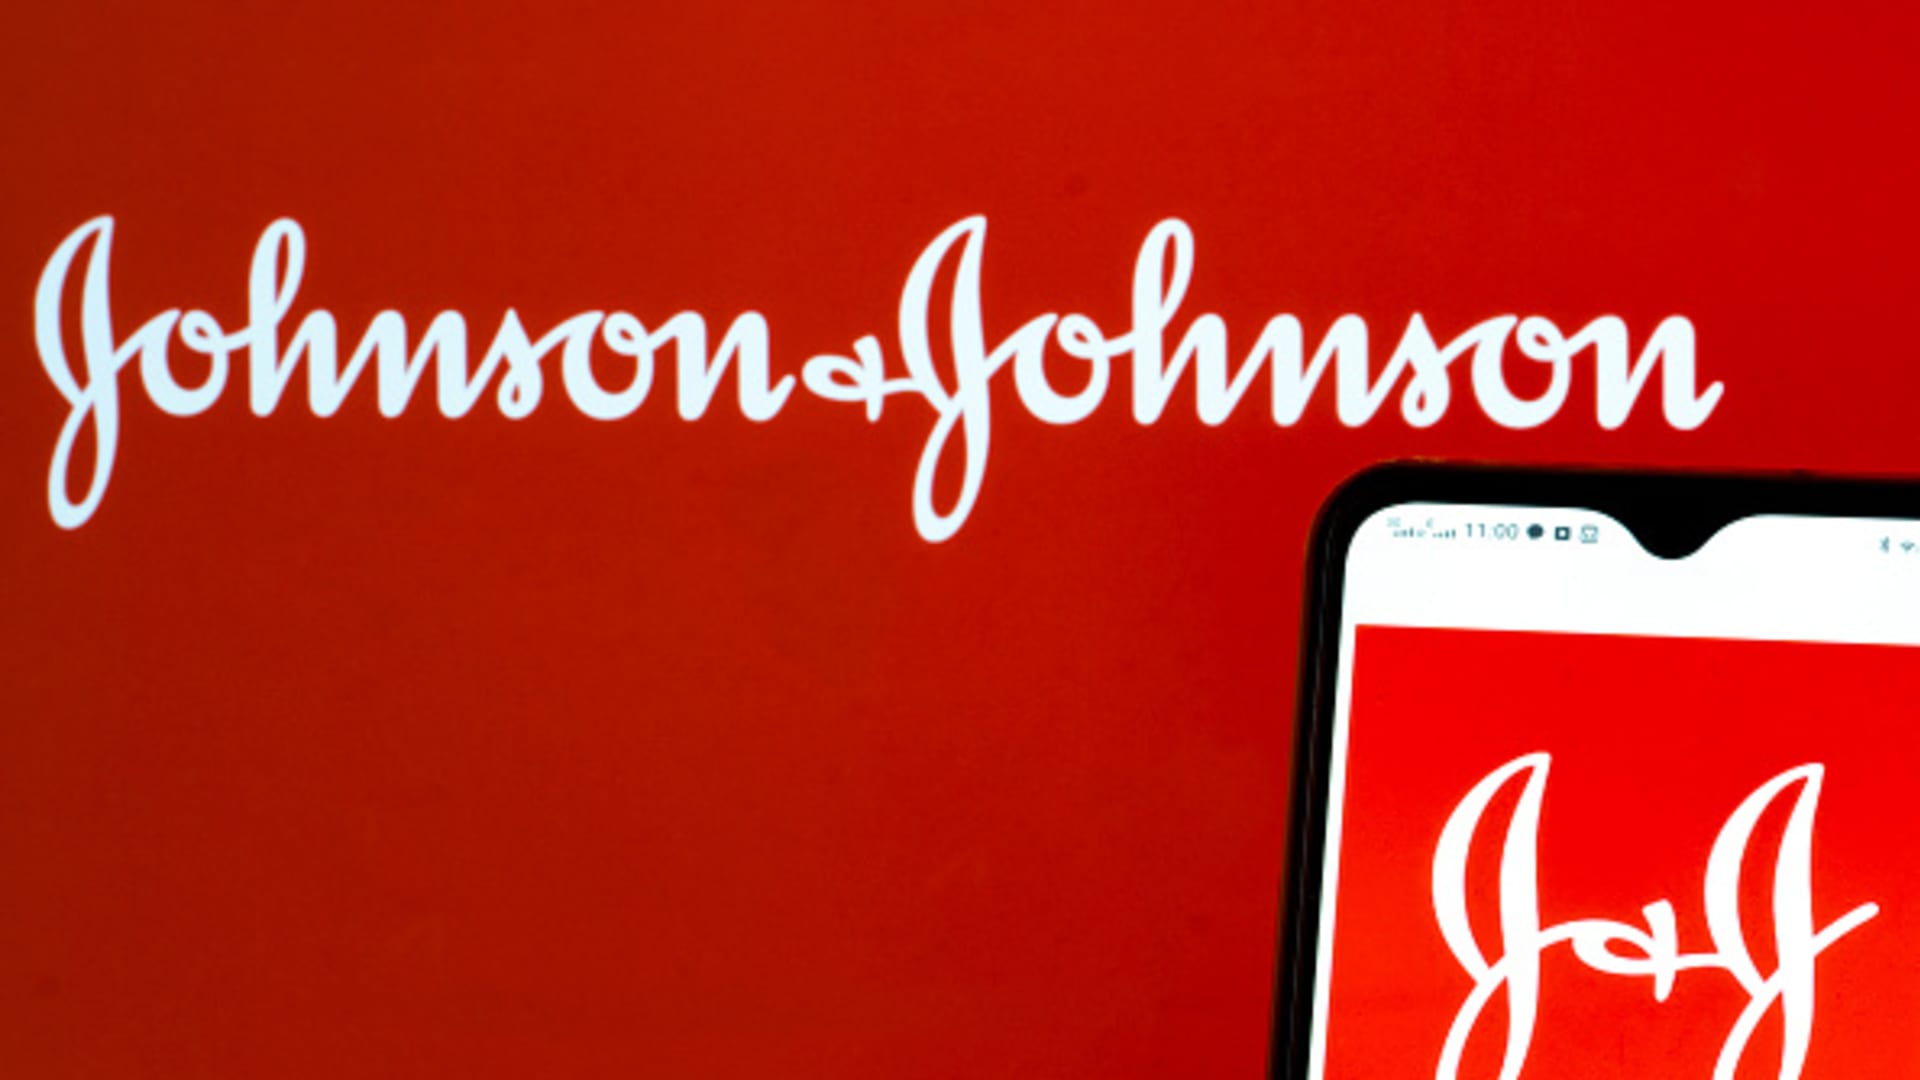 Johnson & Johnson consumer health unit valued at $40 billion ahead of IPO, report says